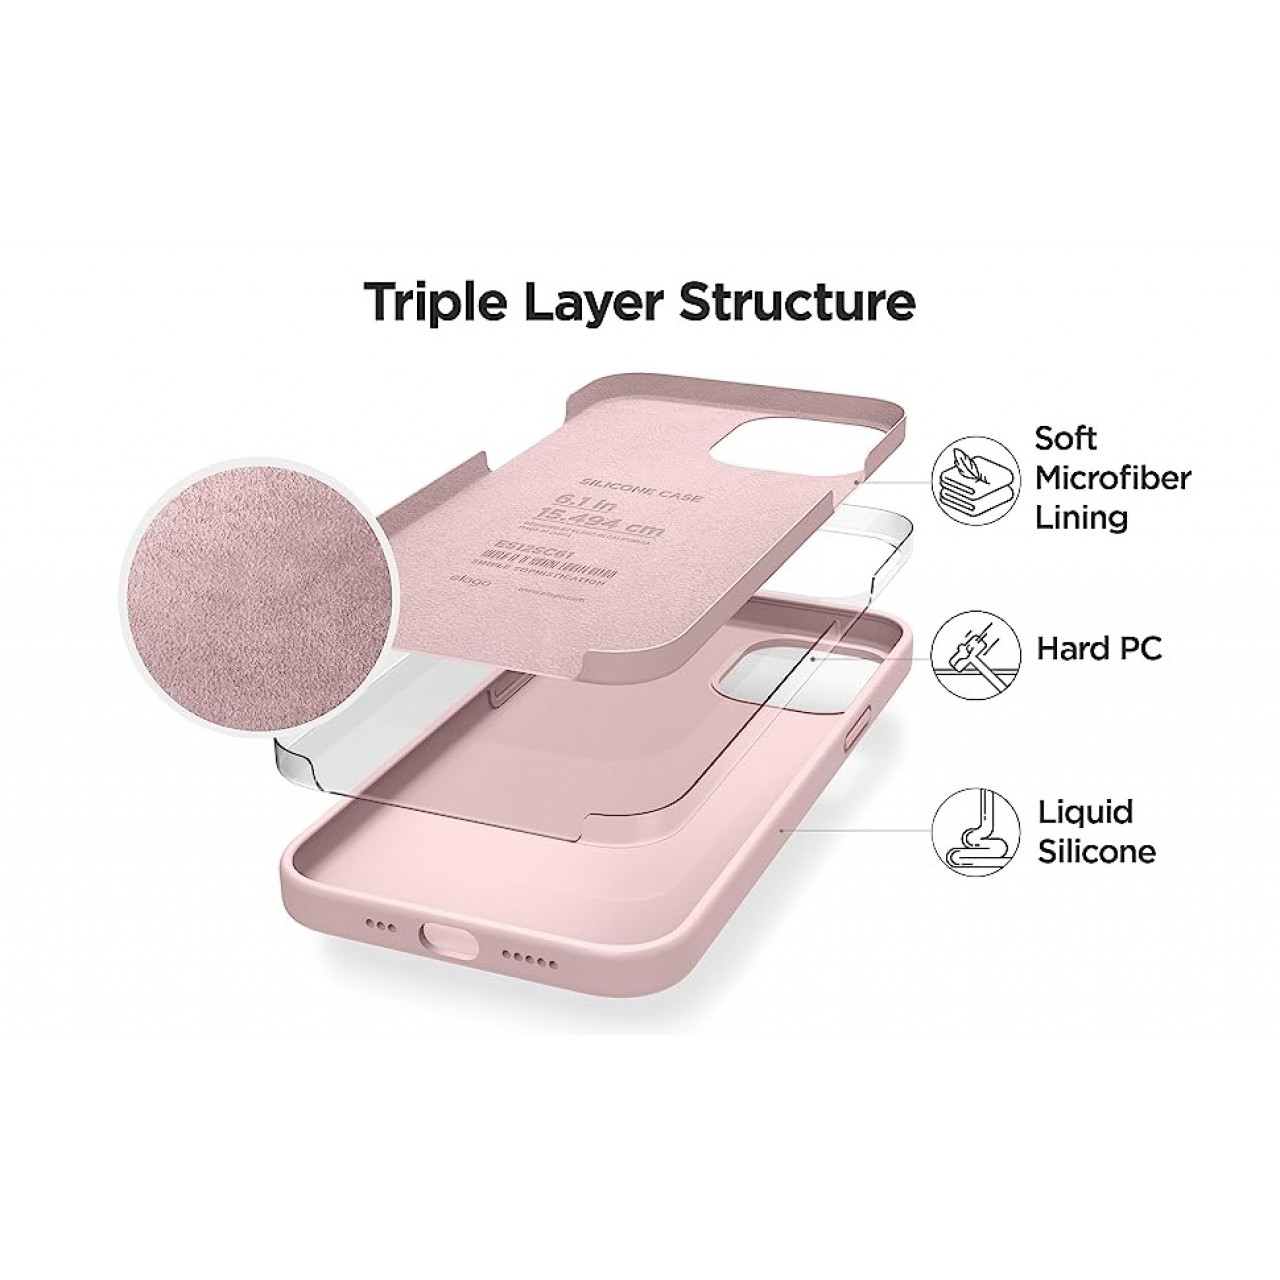 iPhone 12 Pro Max Θήκη Σιλικόνης - Back Case Silicone Light Grey 